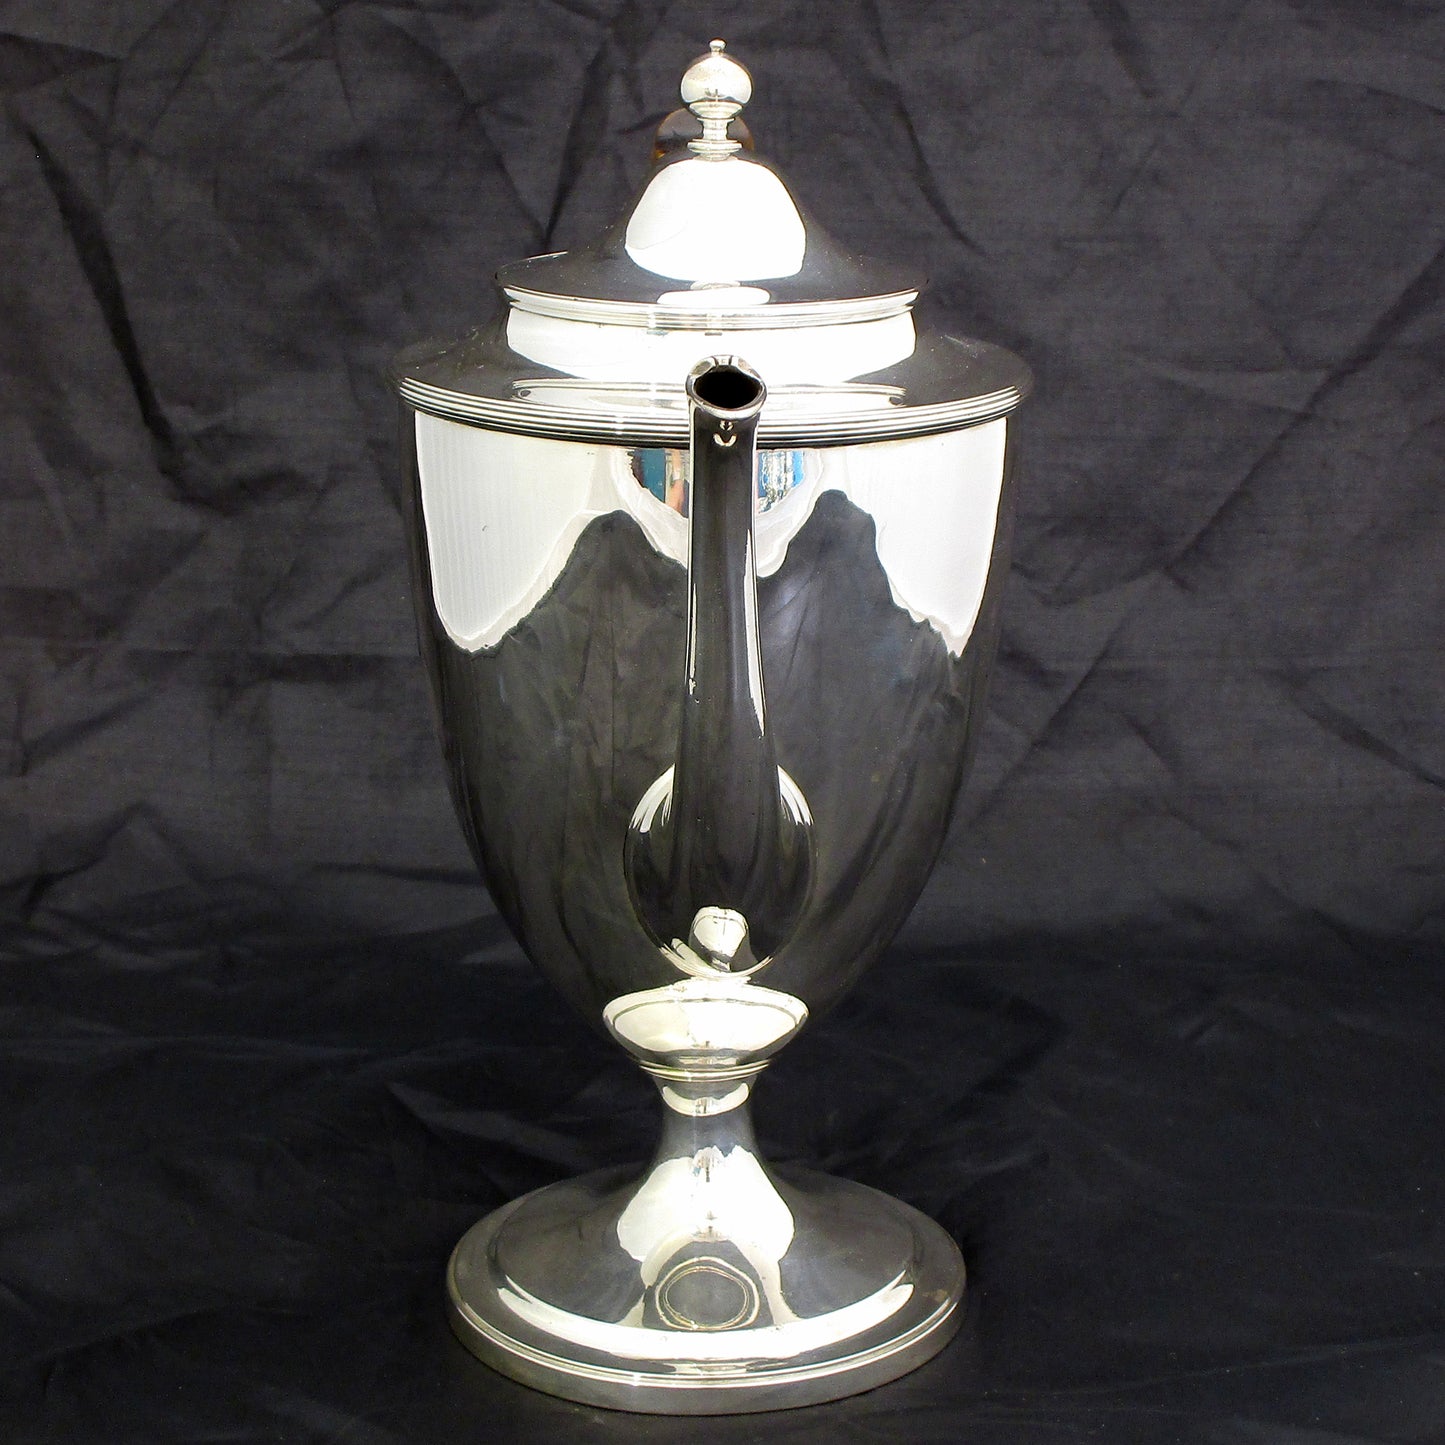 A Georgian sterling silver coffee pot